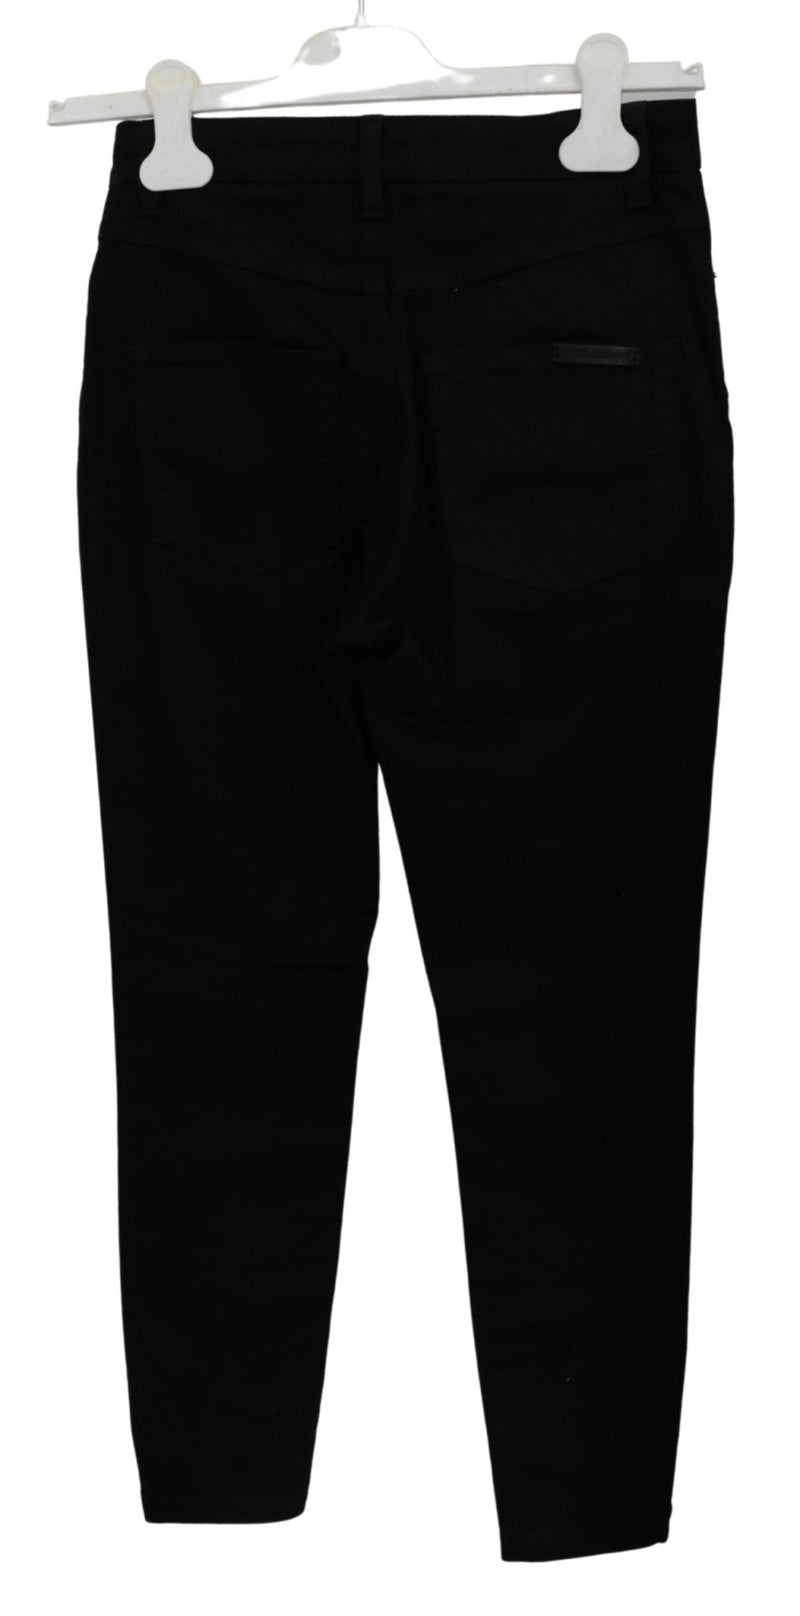 Black Skinny Trouser Cotton Stretch Jeans - Avaz Shop